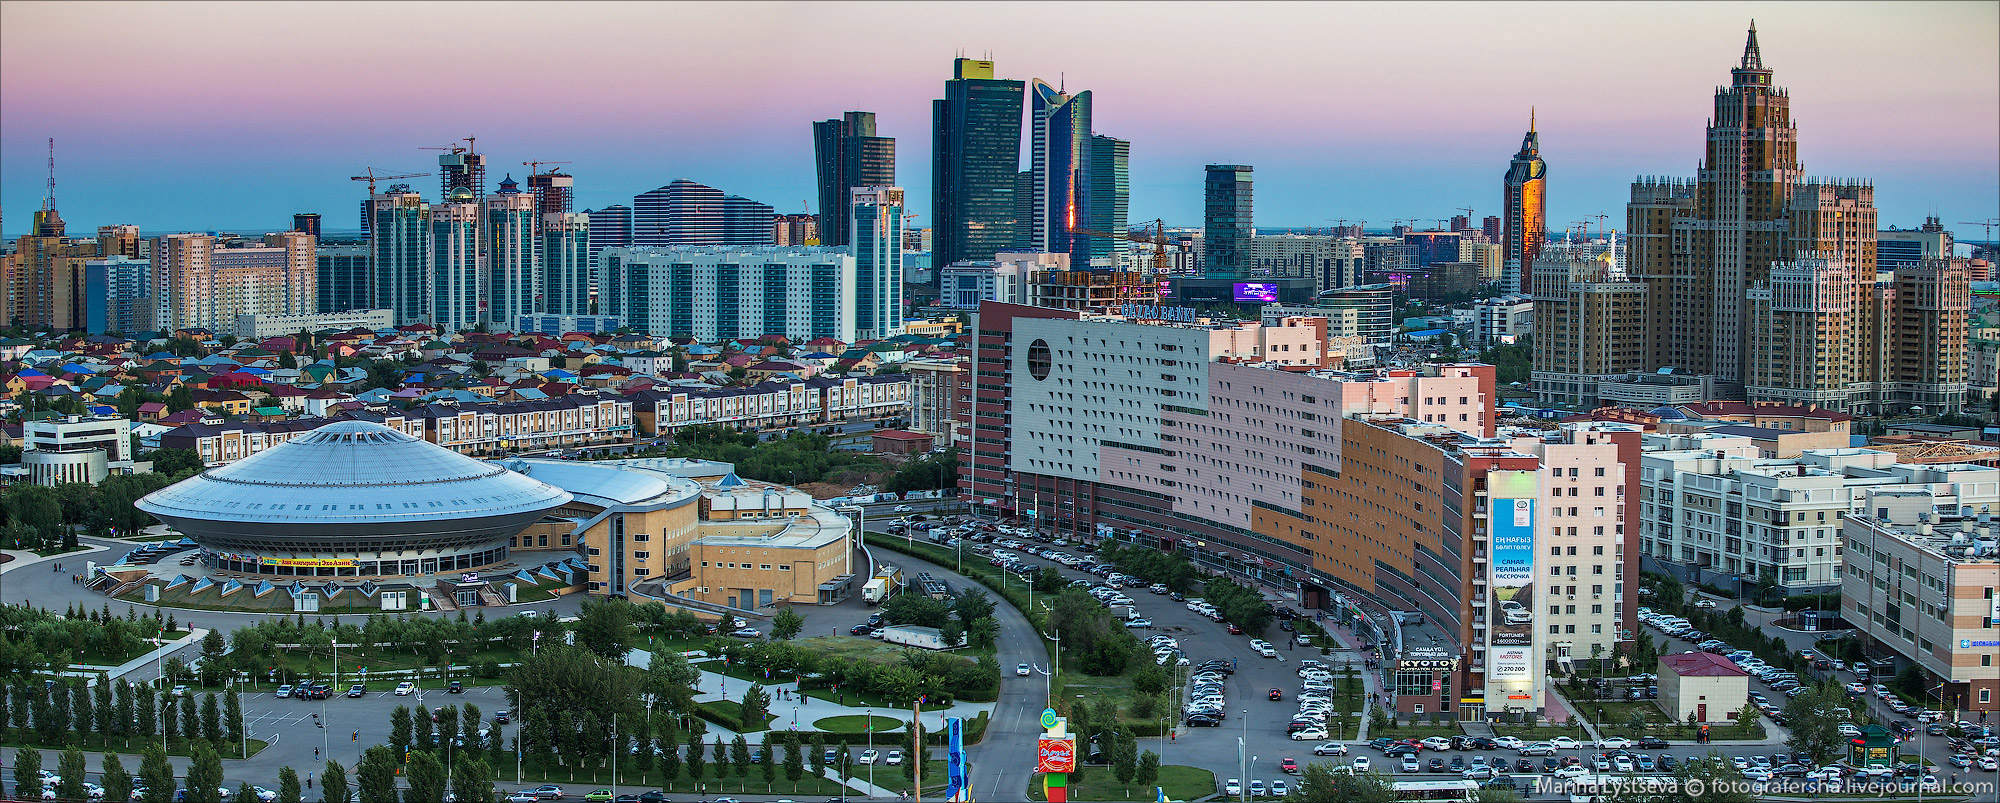 Виды рк. Астана панорама. Астана с высоты птичьего полета. Нур-Султан панорама города. Город Нур-Султан с высоты.